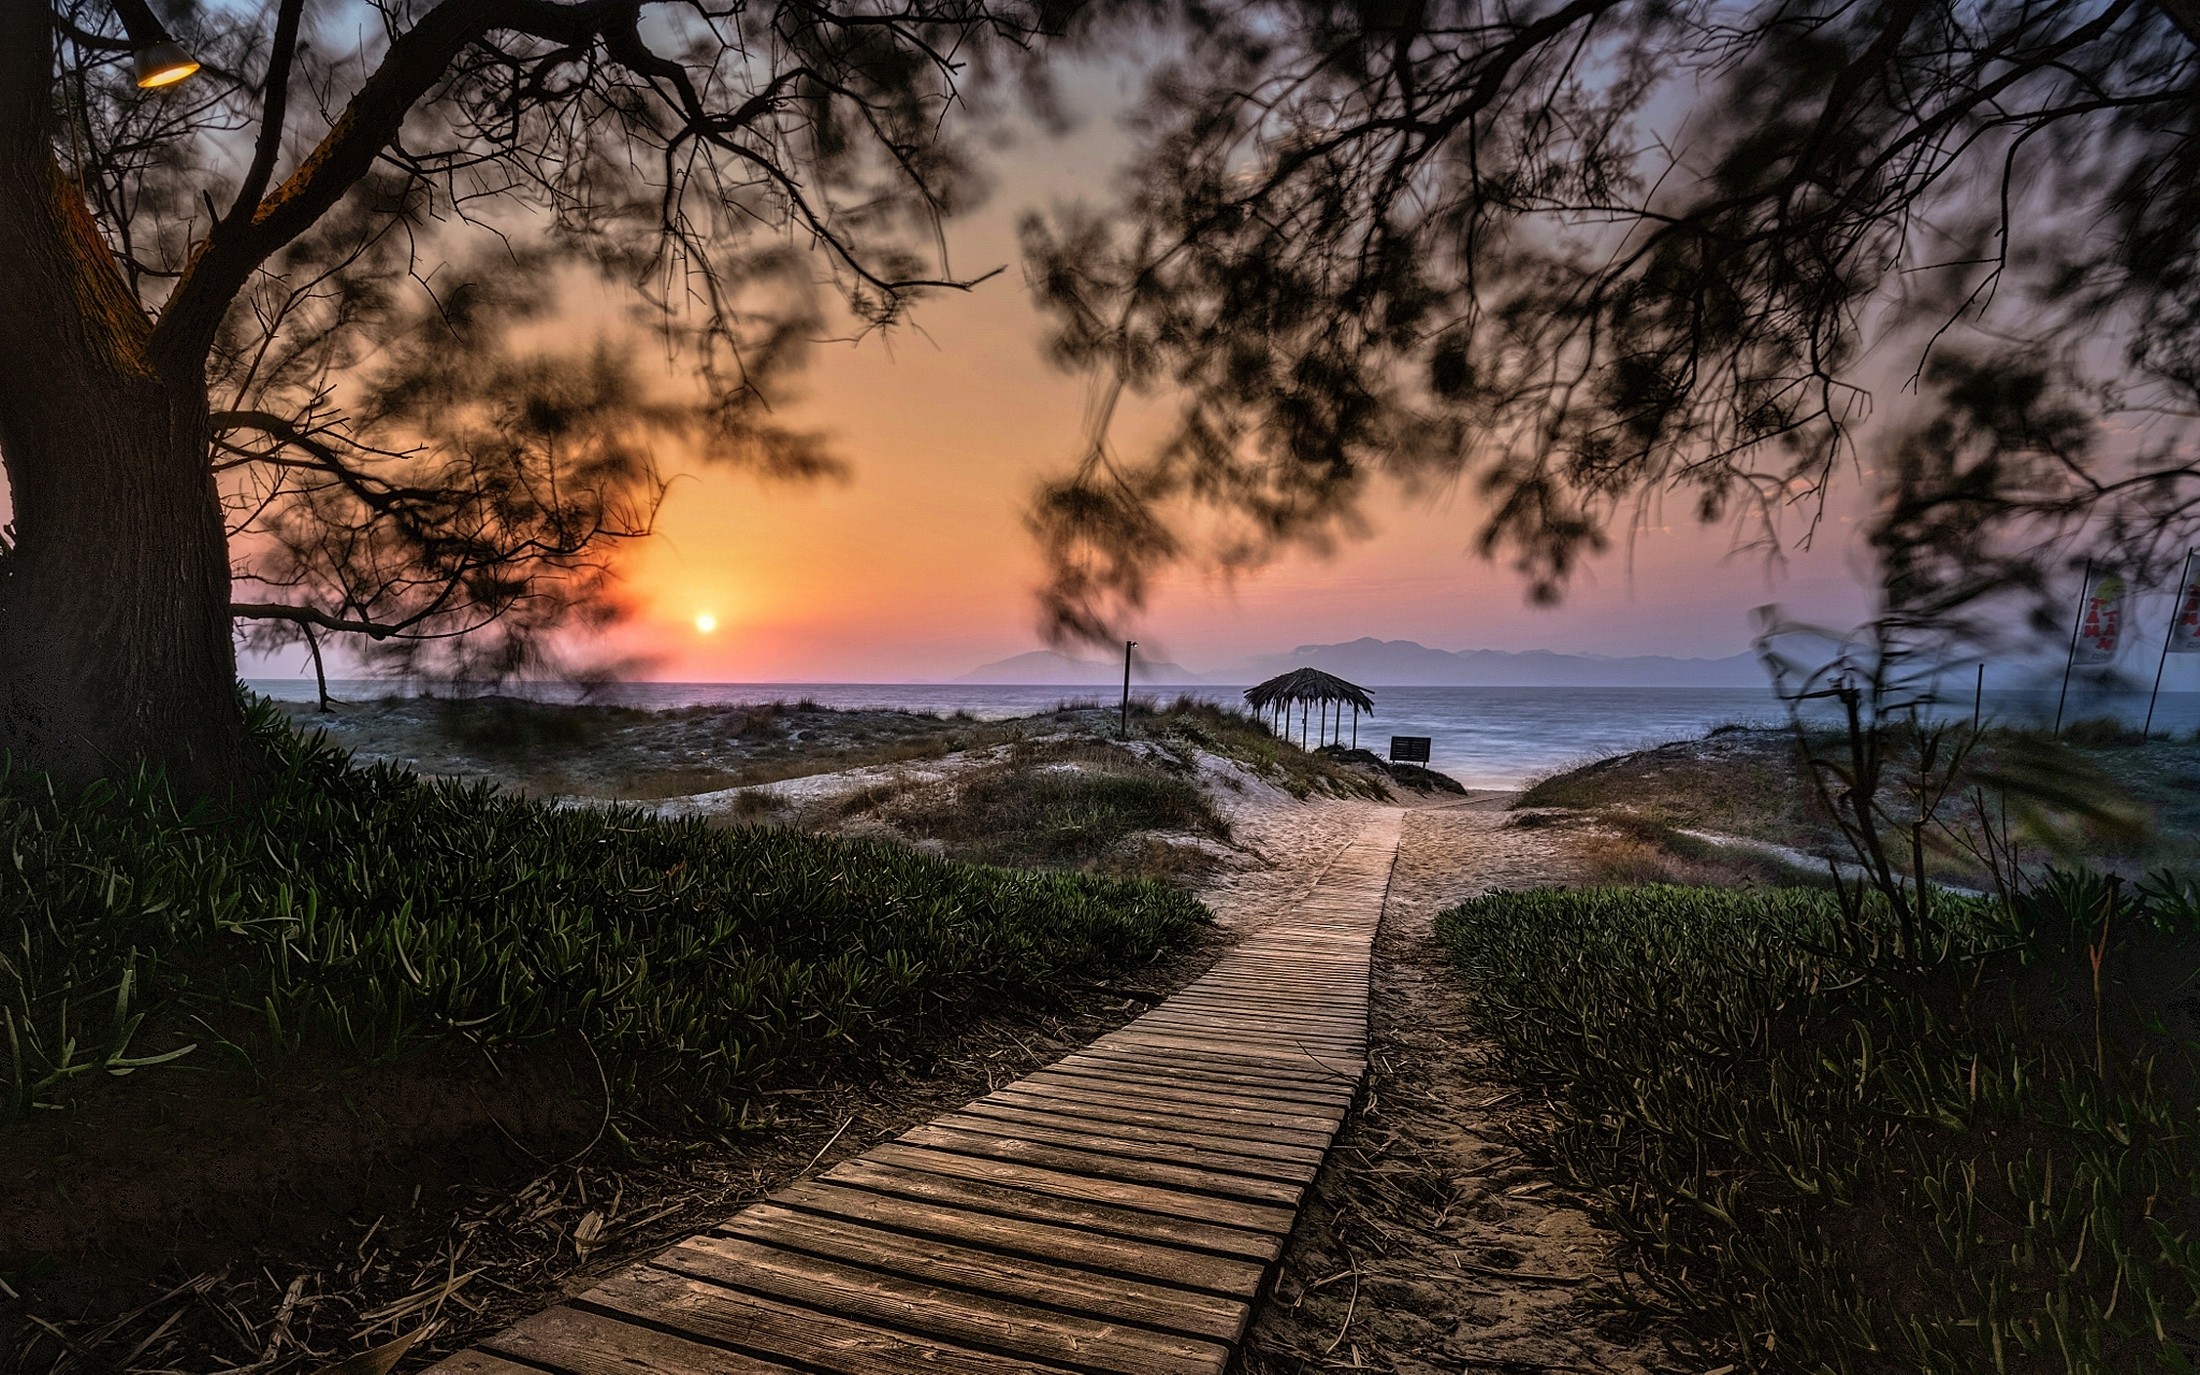 General 2200x1375 landscape nature island path walkway beach sunset trees shrubs sea Greece sand